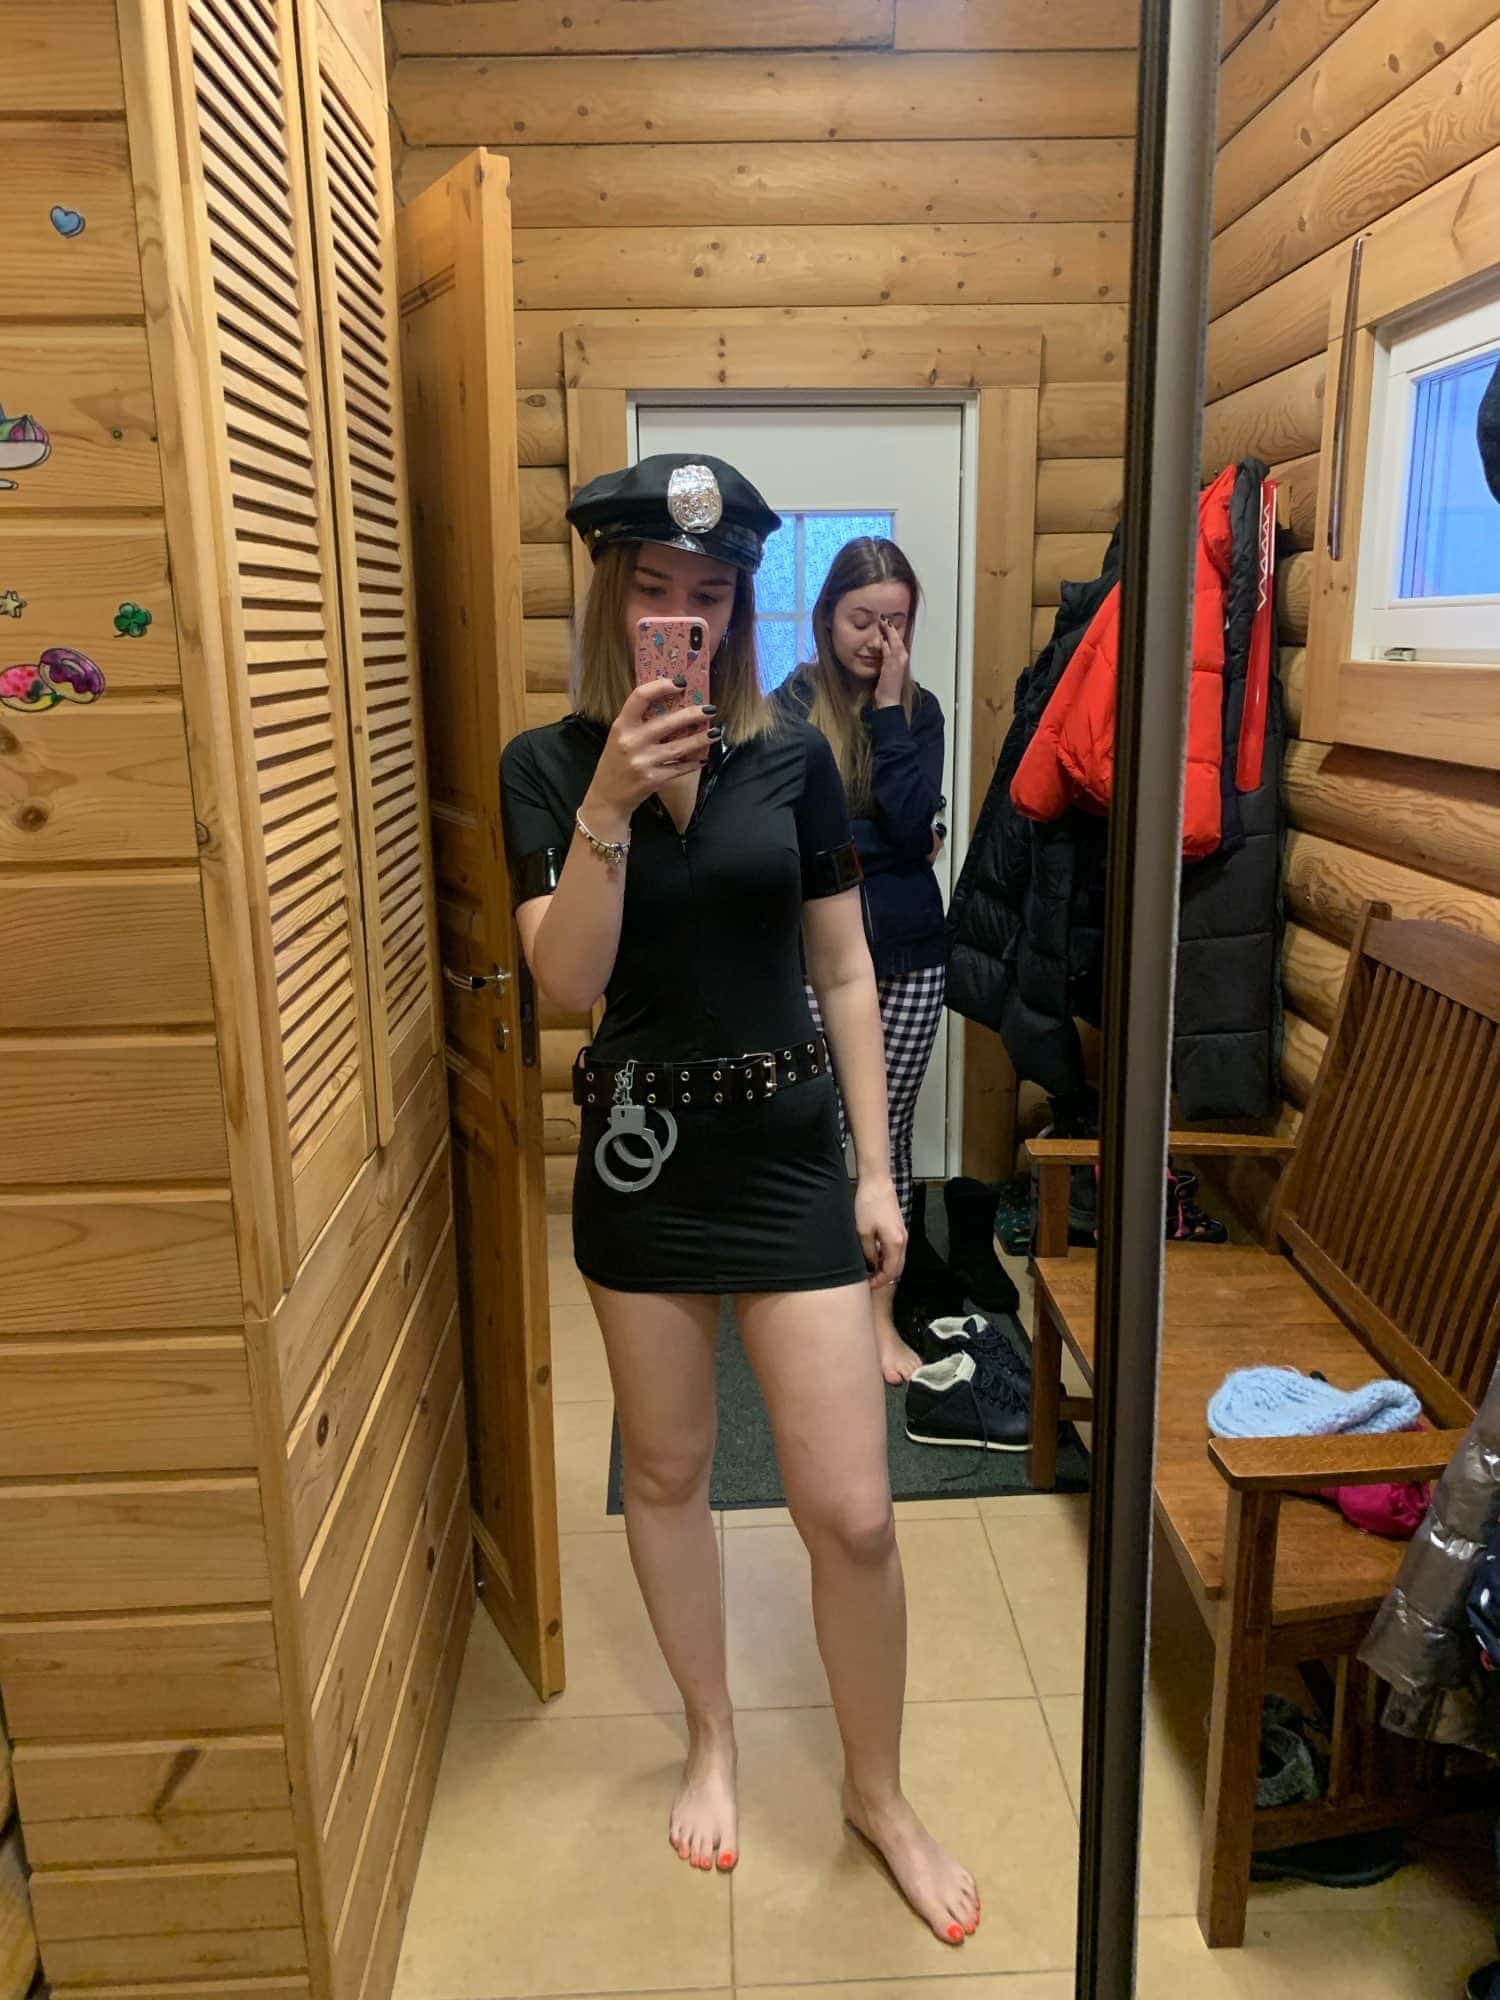 Cop Officer Outfit Uniform Polizeiuniform 6